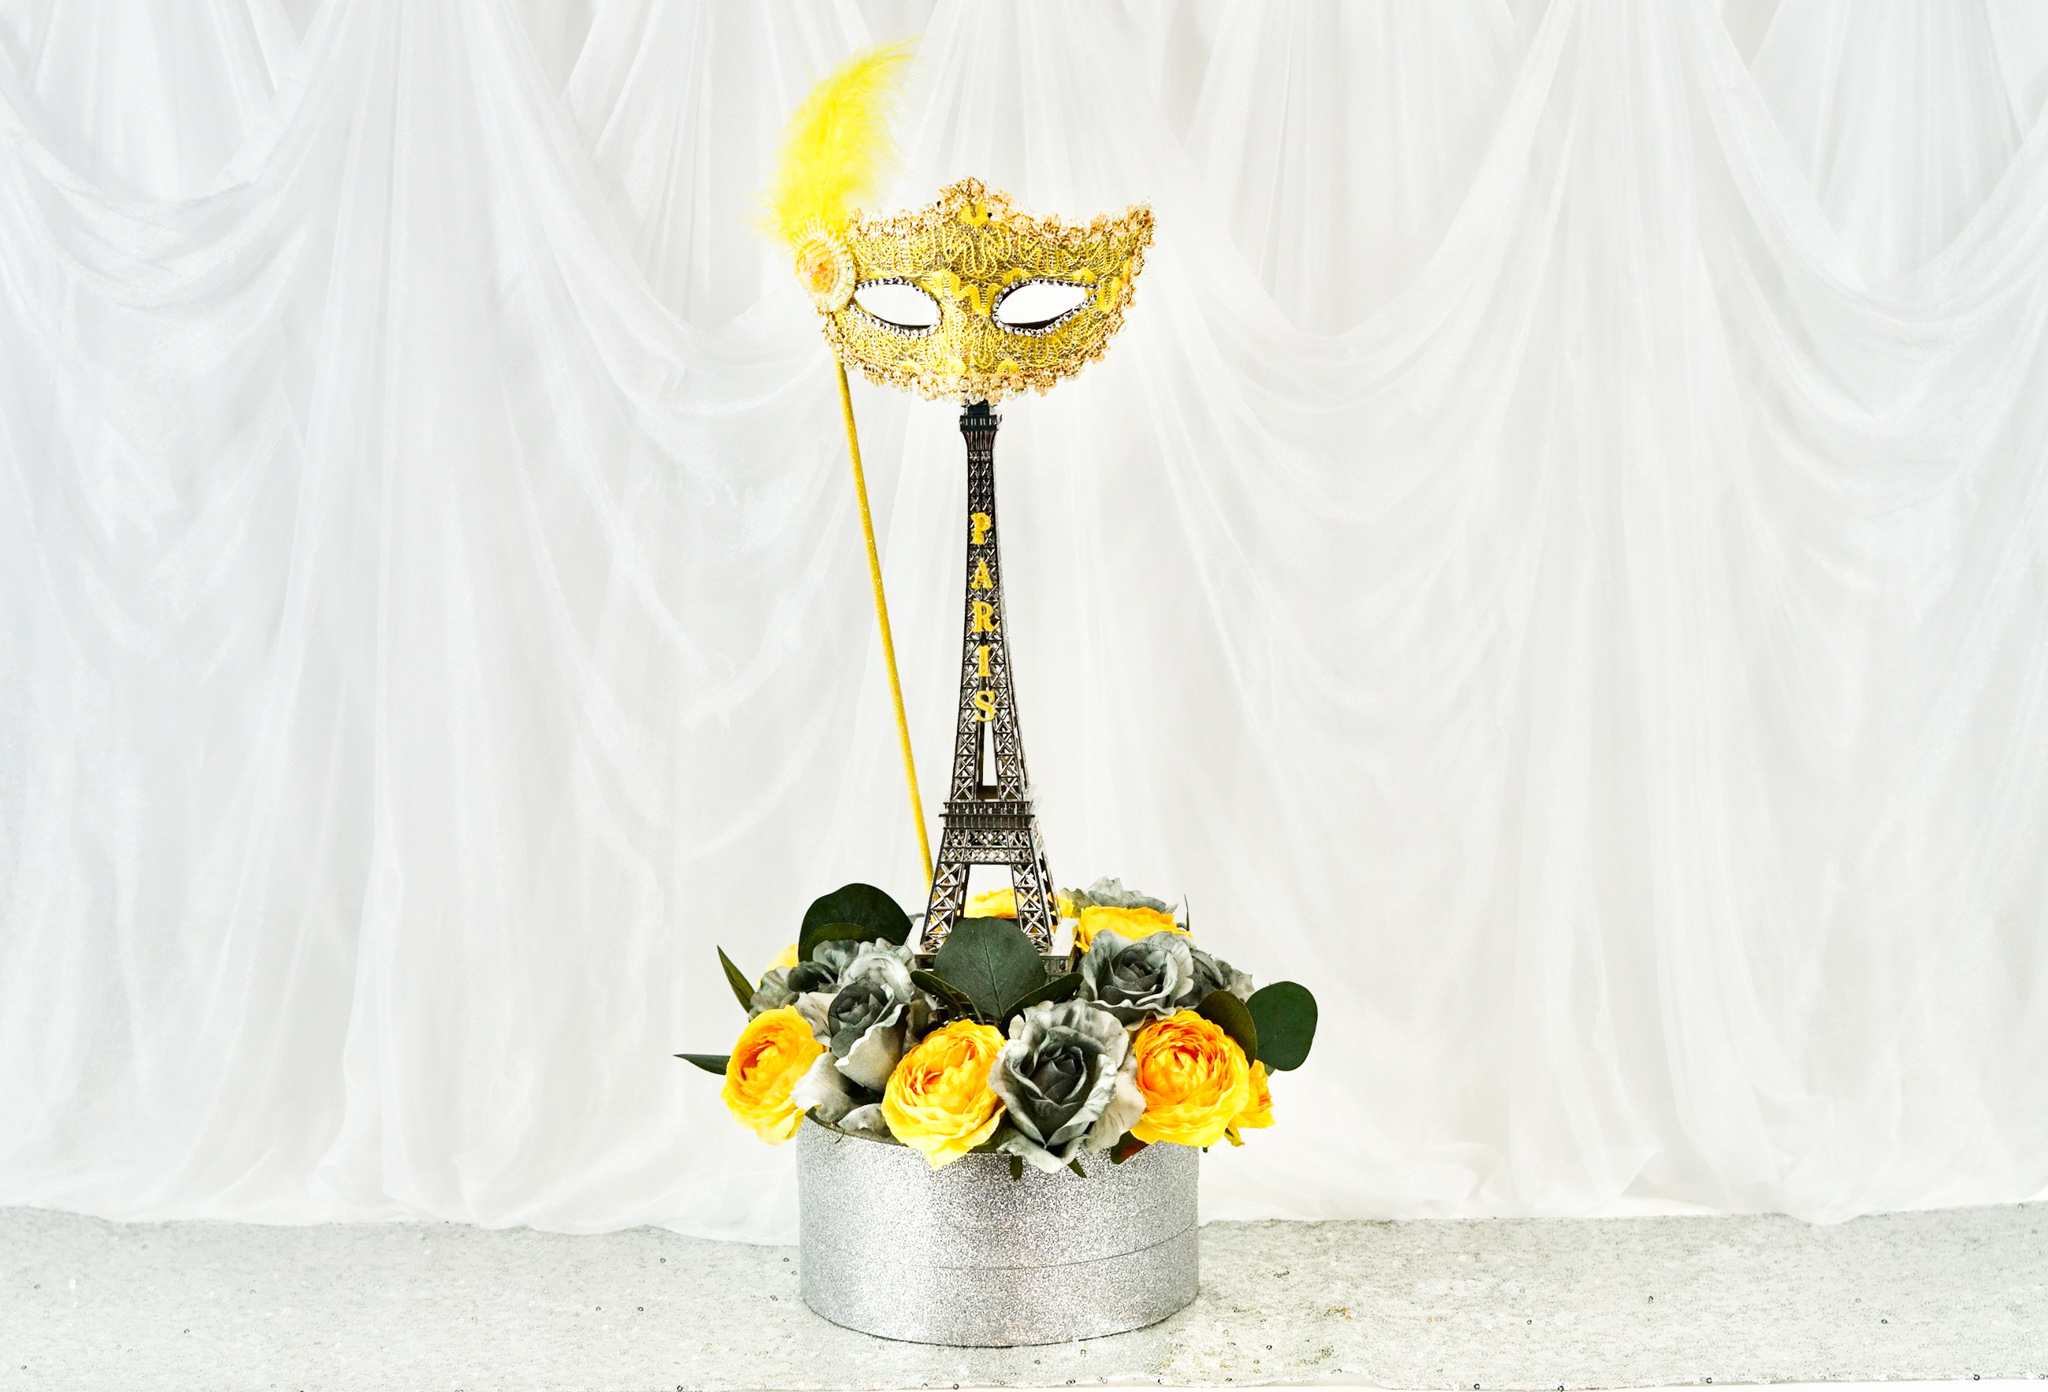 How To Make a Fabulous Masquerade Paris Sweet 16 Party Centerpiece